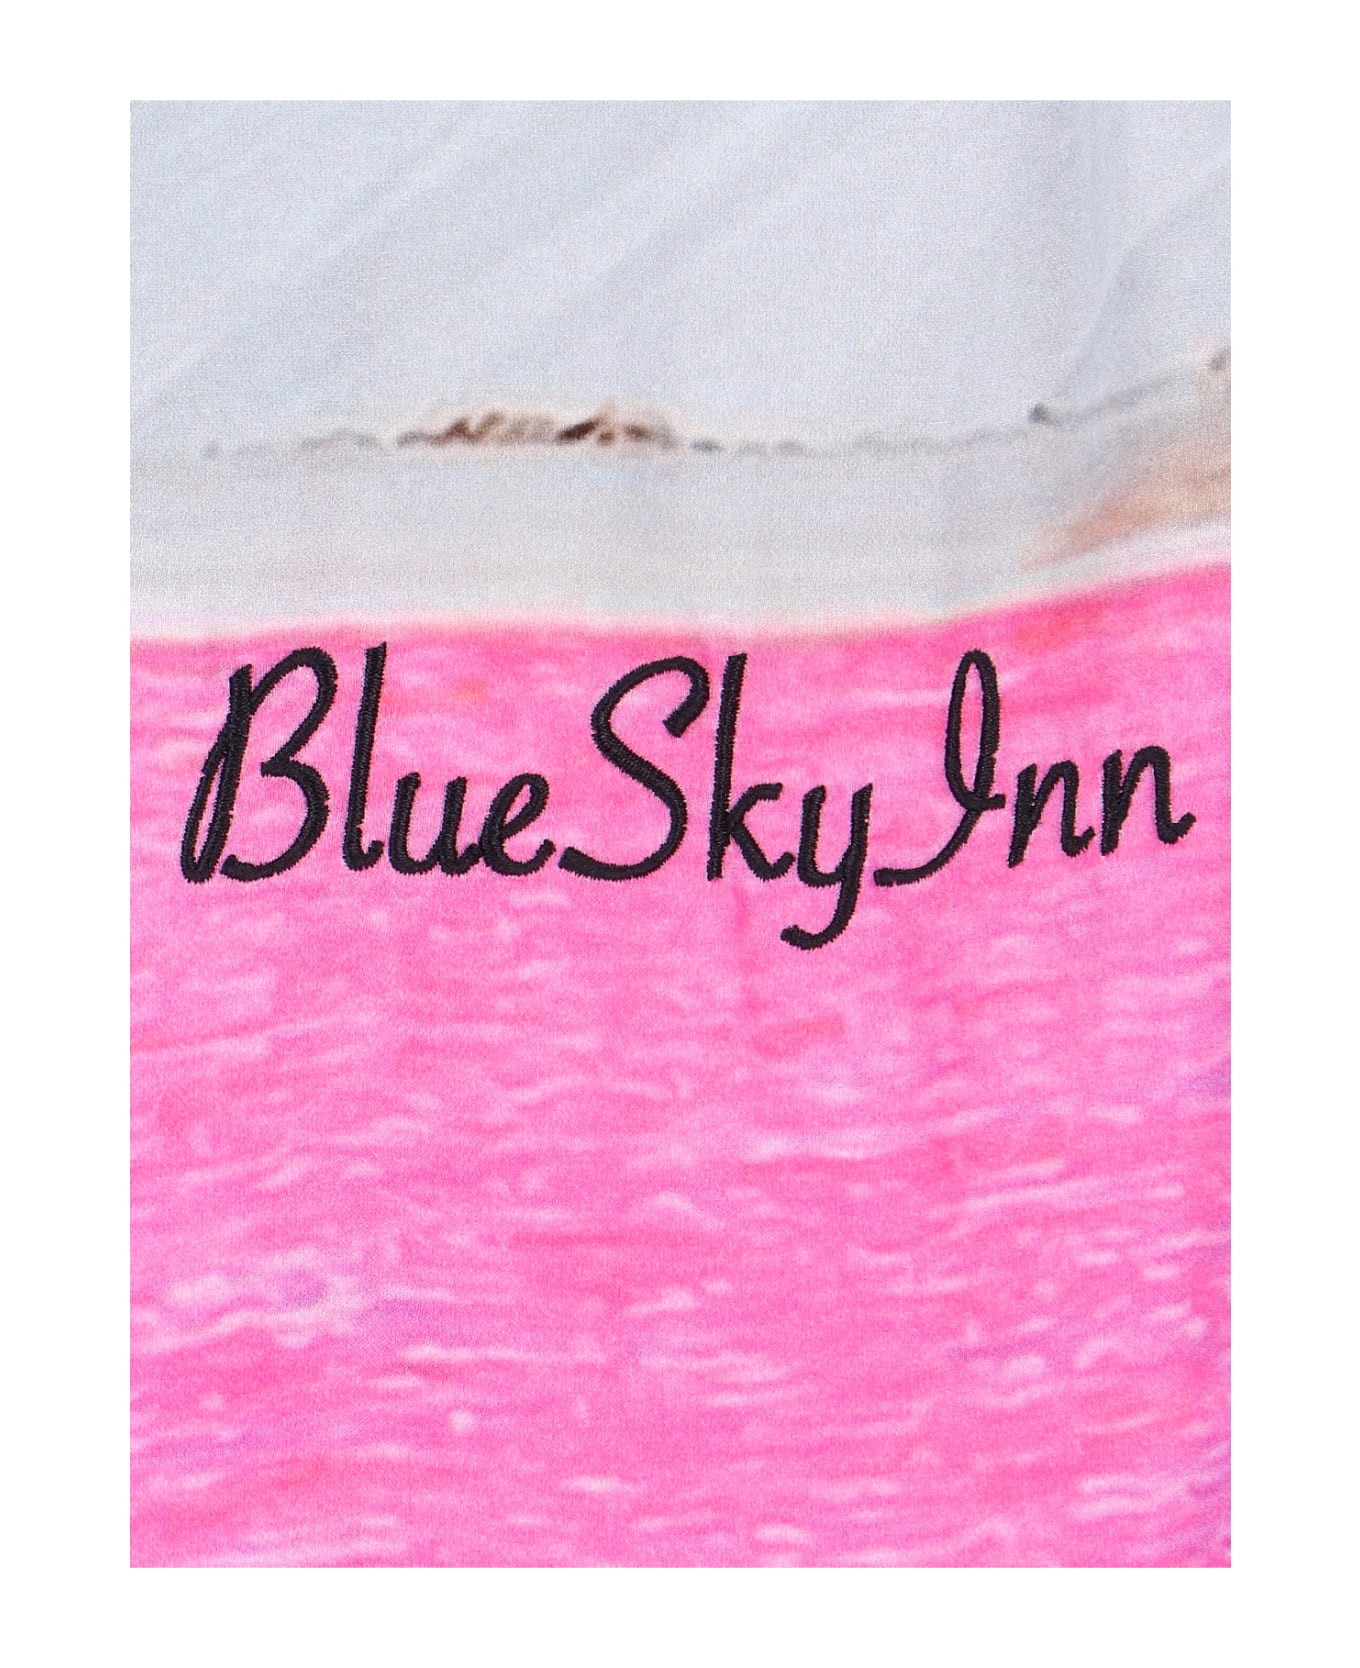 Blue Sky Inn 'pink Salt' Shirt - Fantasia